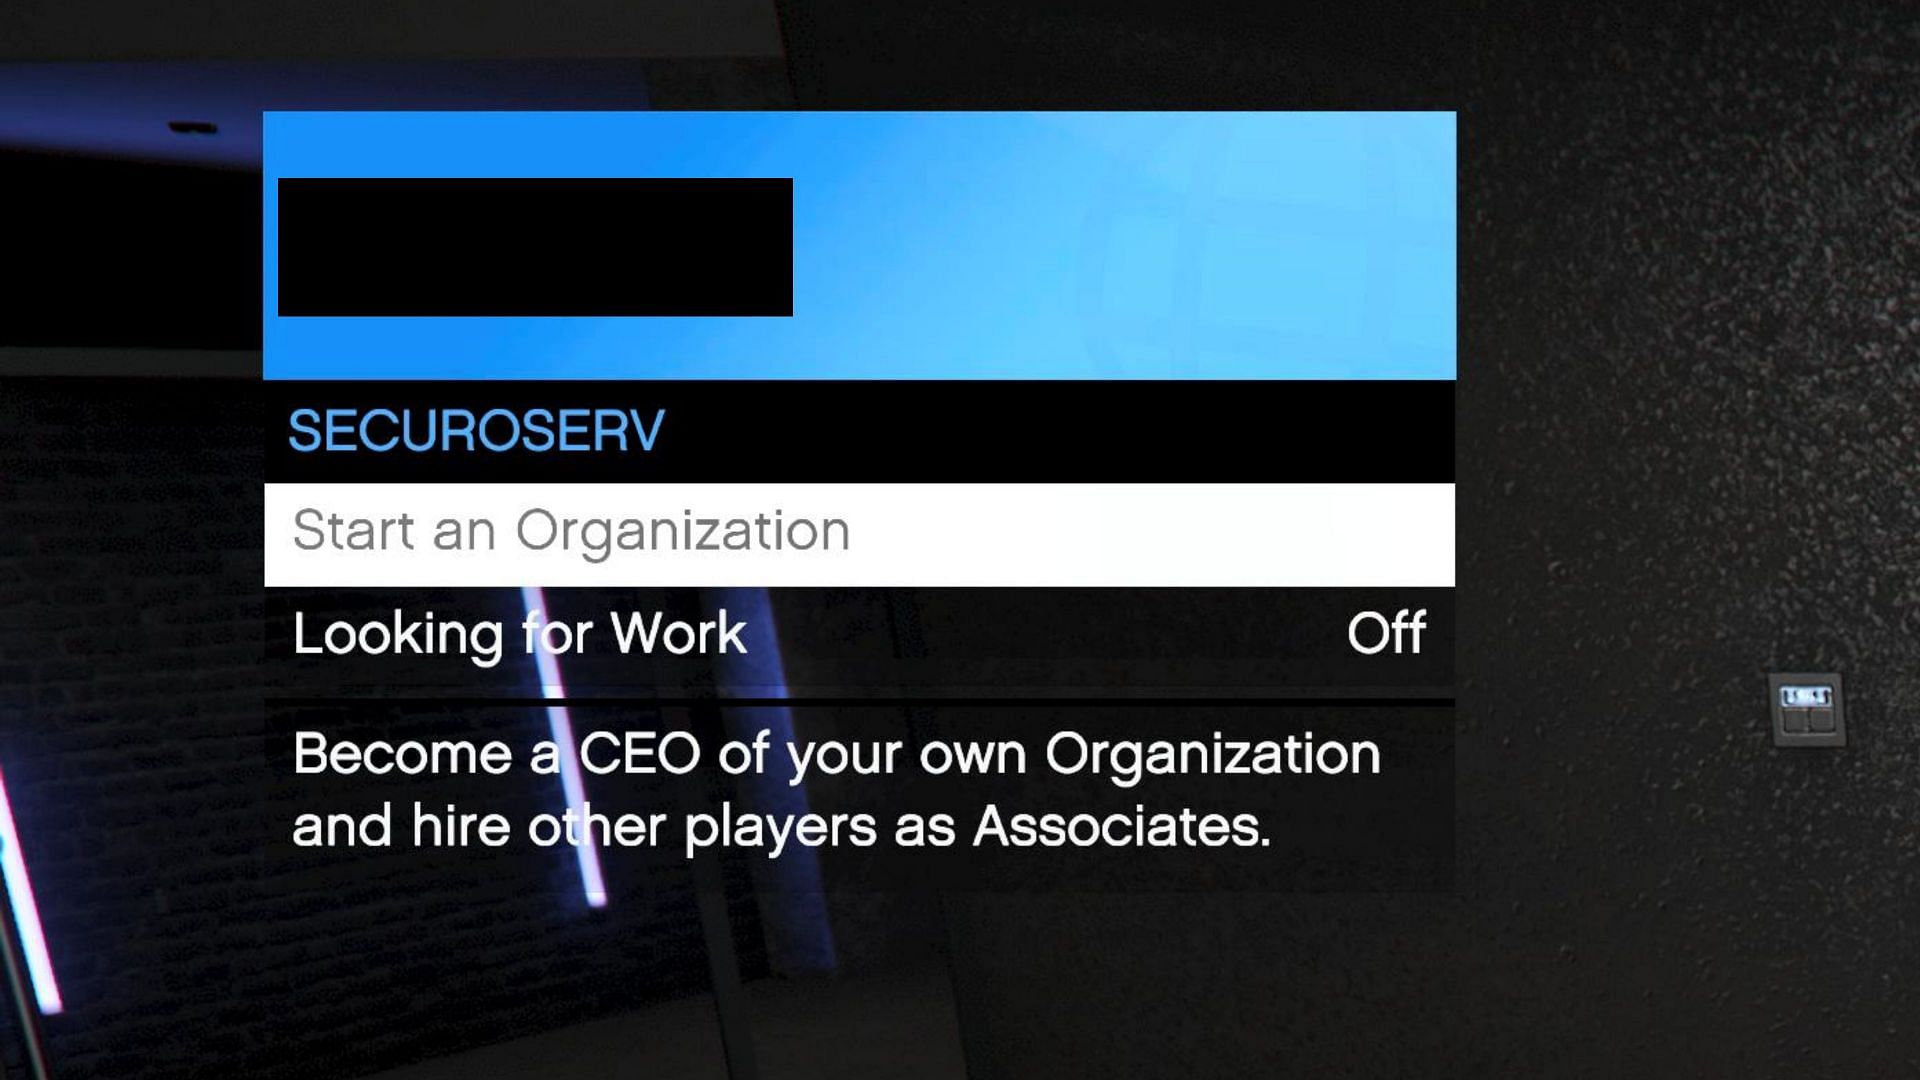 Then start your Organization here (Image via Rockstar Games)